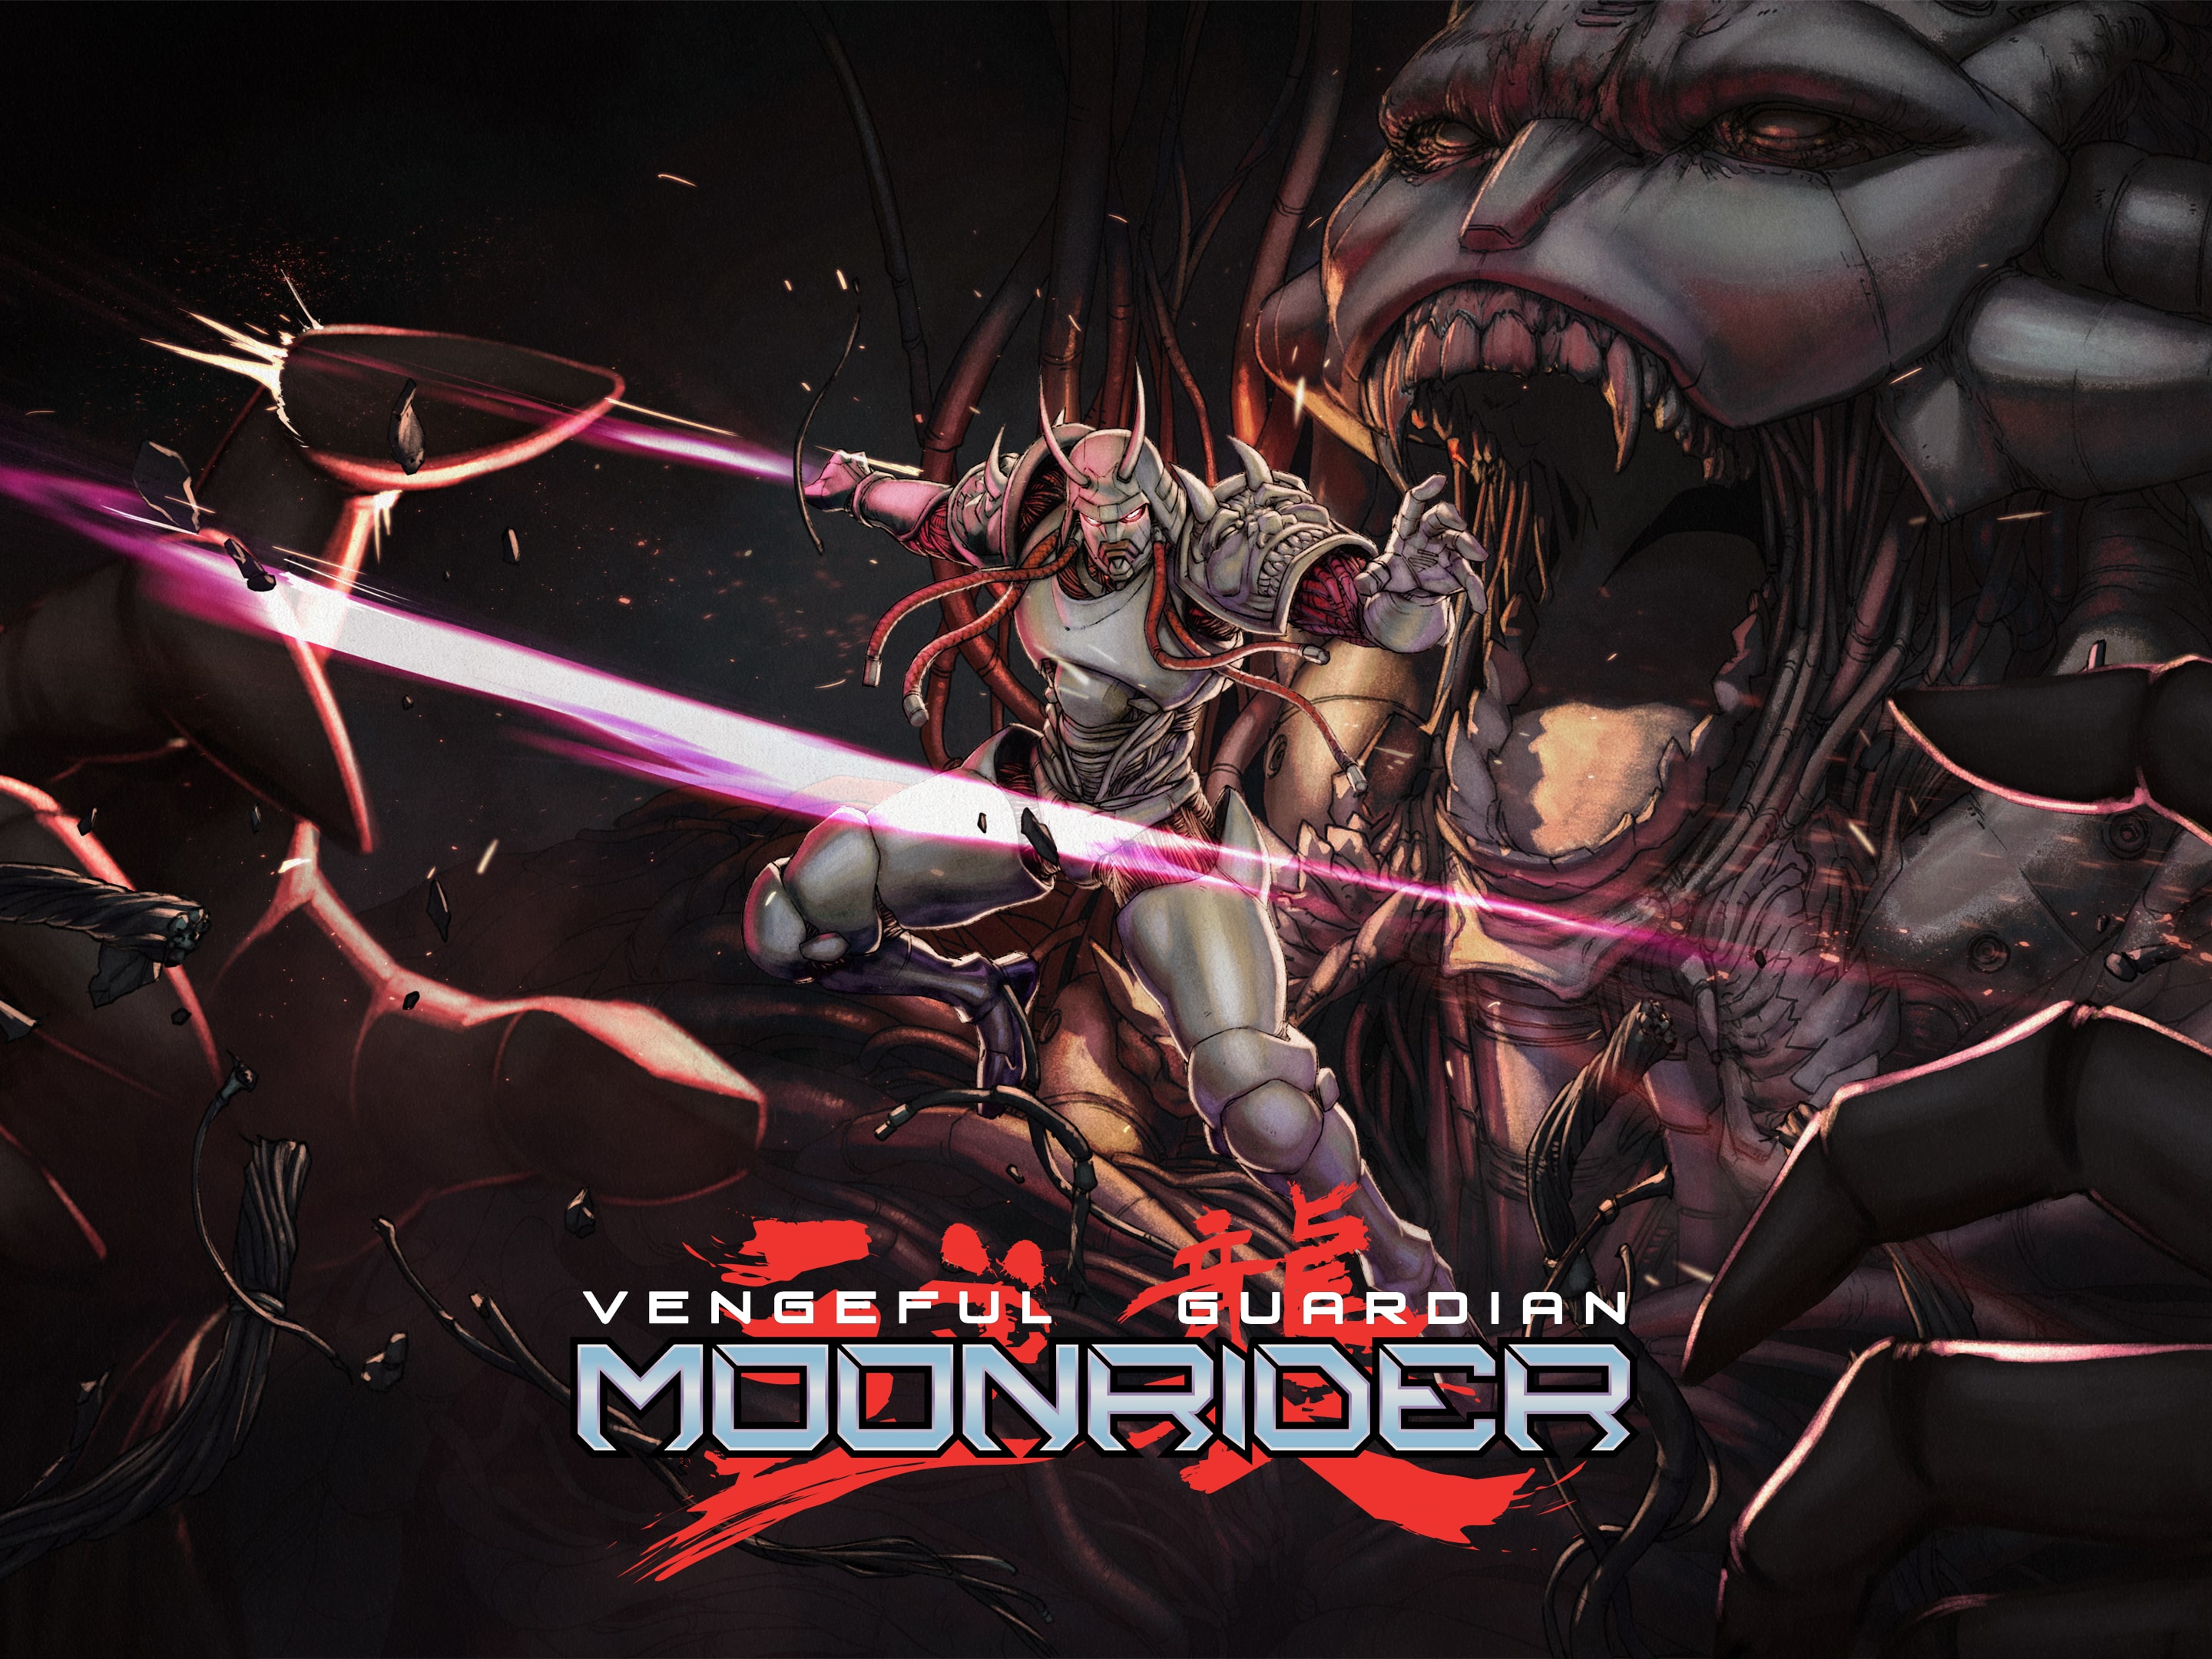 Things We Wish We Knew Before Starting Vengeful Guardian: Moonrider